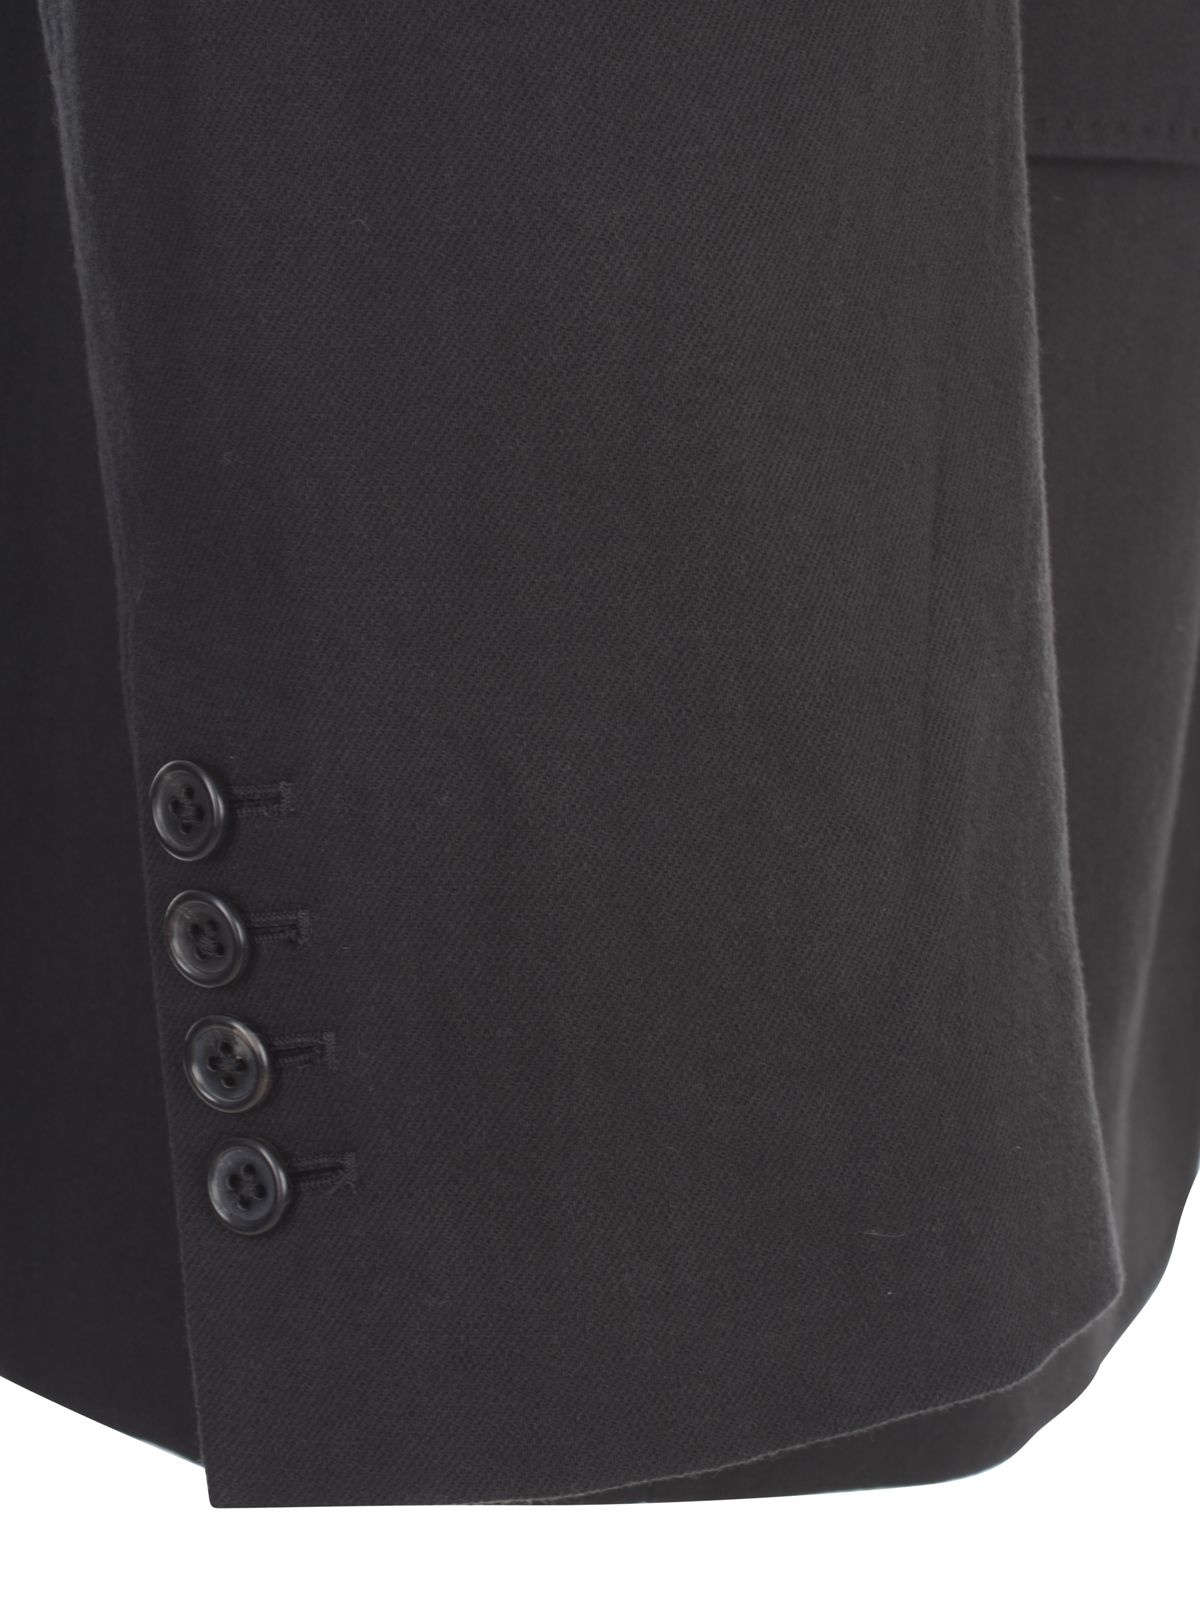 Palomar Ann Demeulemeester Man`s black cotton jacket - 4